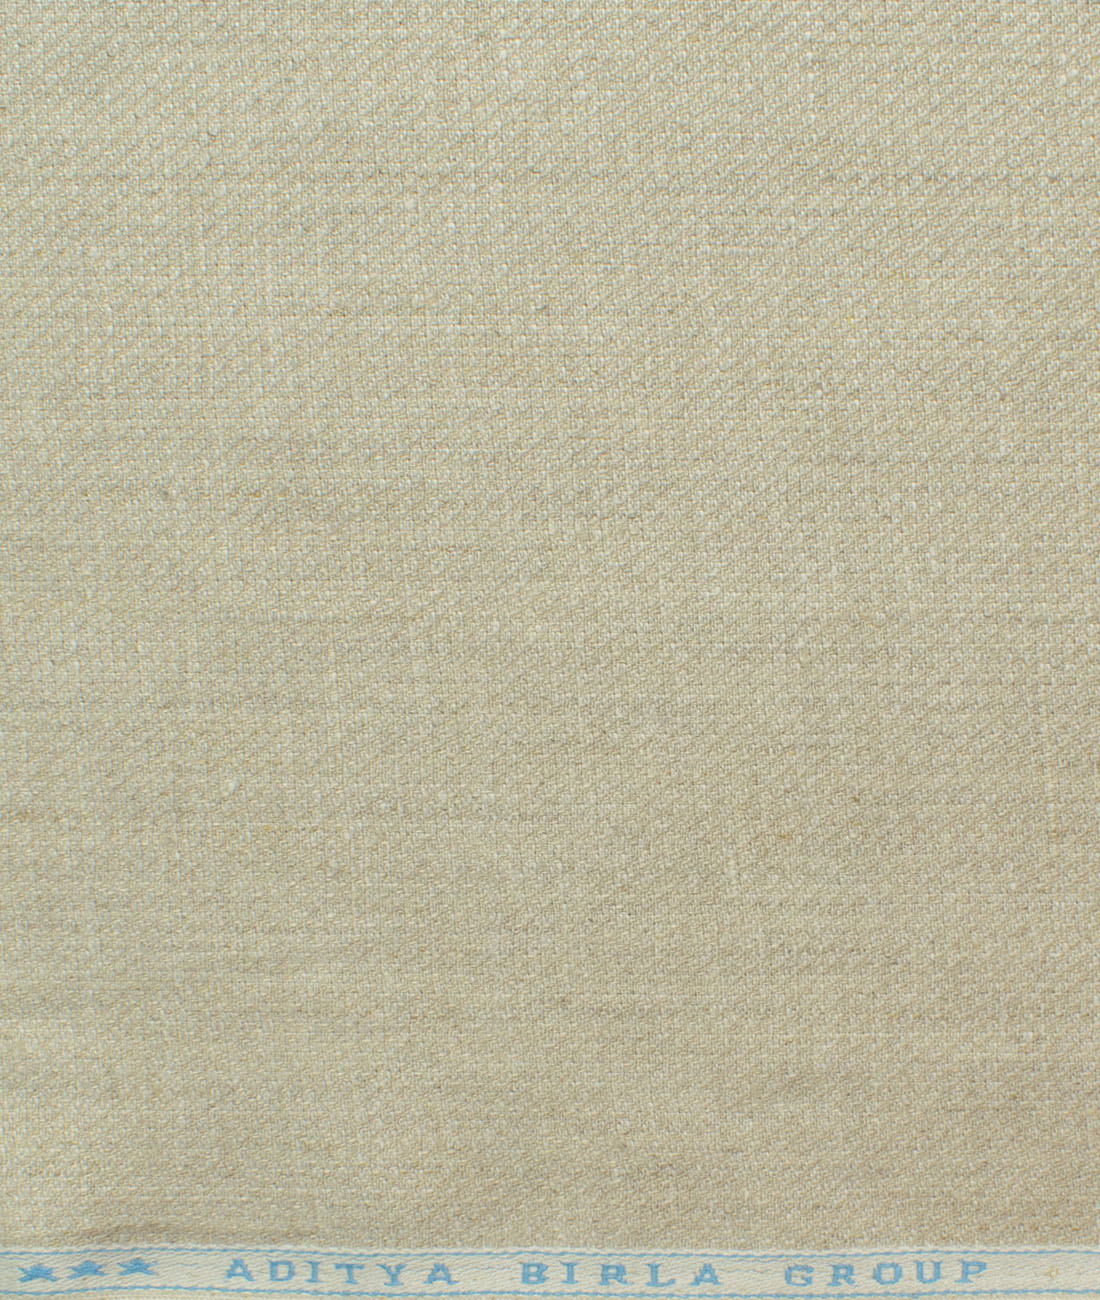 Linen Club Men's 100% Linen 30 LEA Structured 3.75 Meter Unstitched Suiting Fabric (Natural Beige)